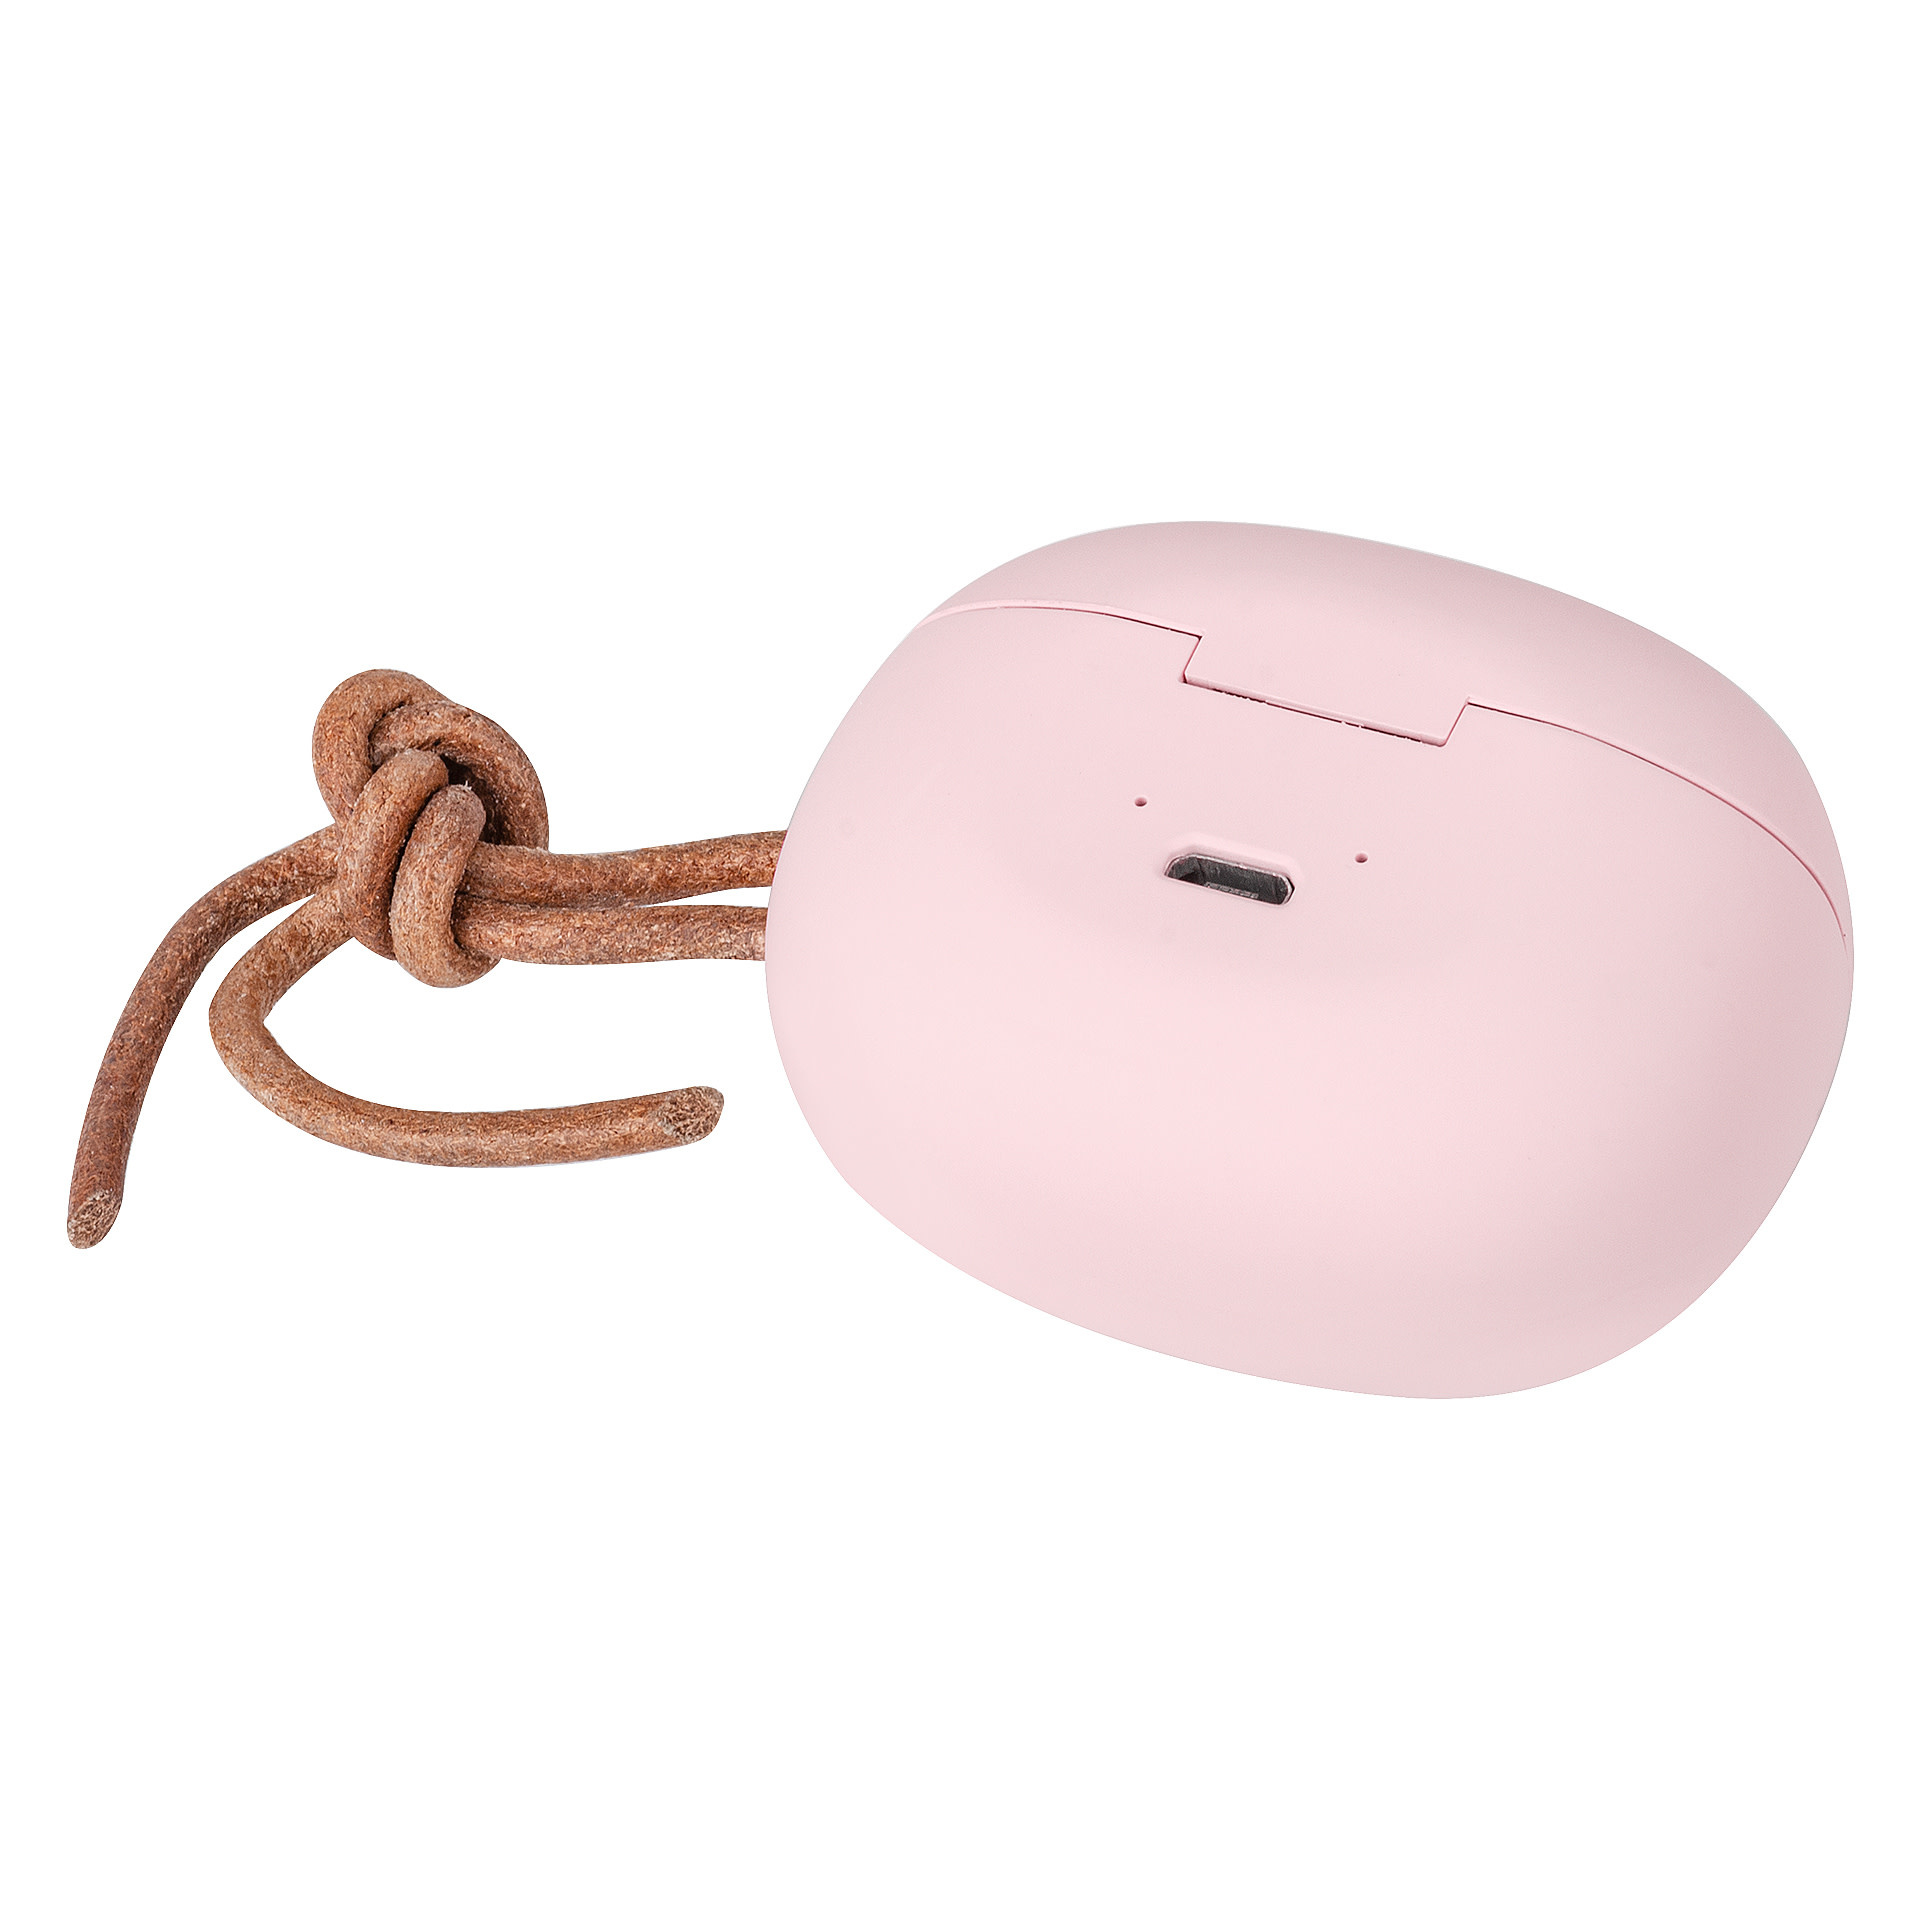 UNIQ Buds ll wireless earphones töltőtokkal - Pink